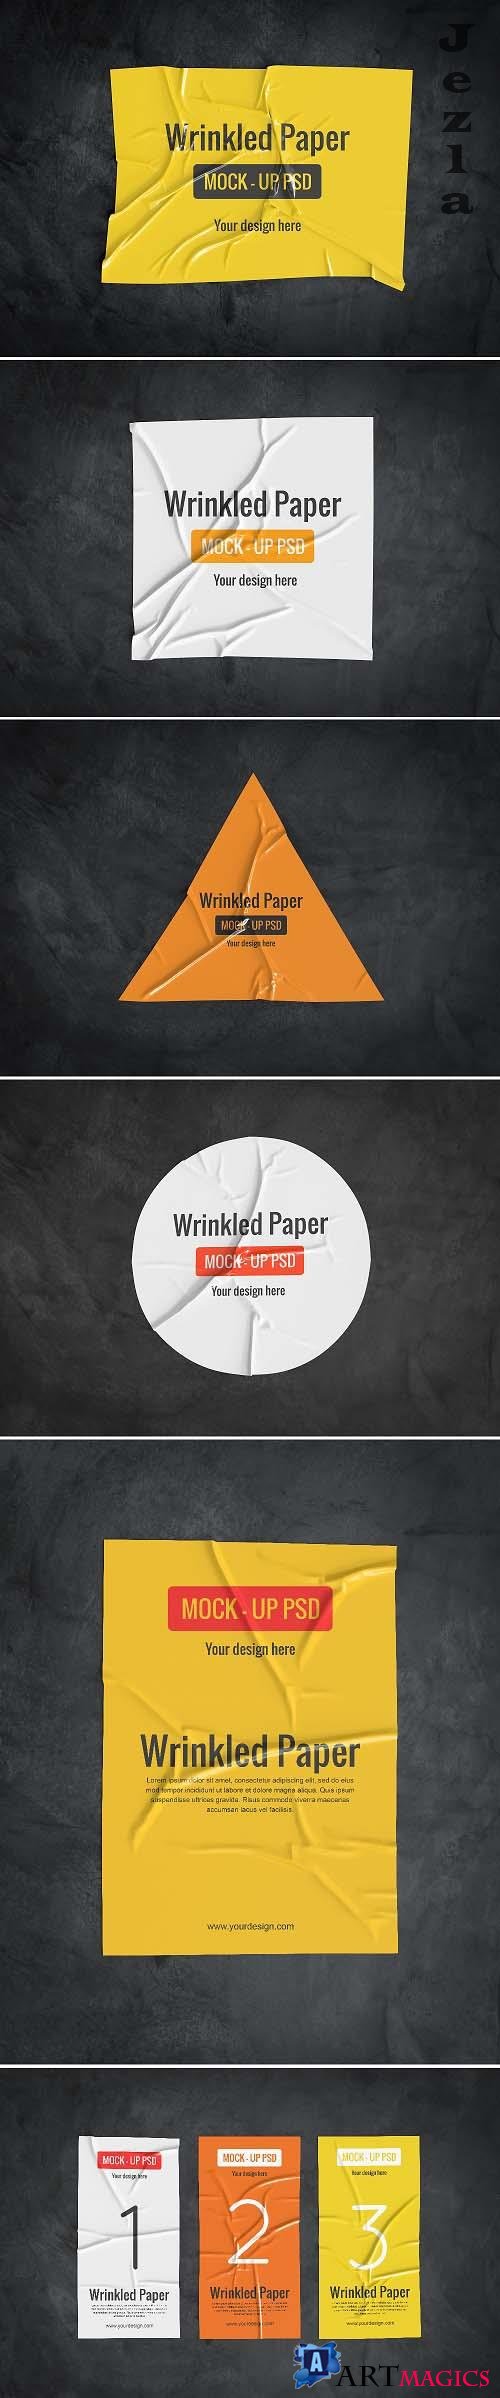 Wrinkled Paper Mockup Collection